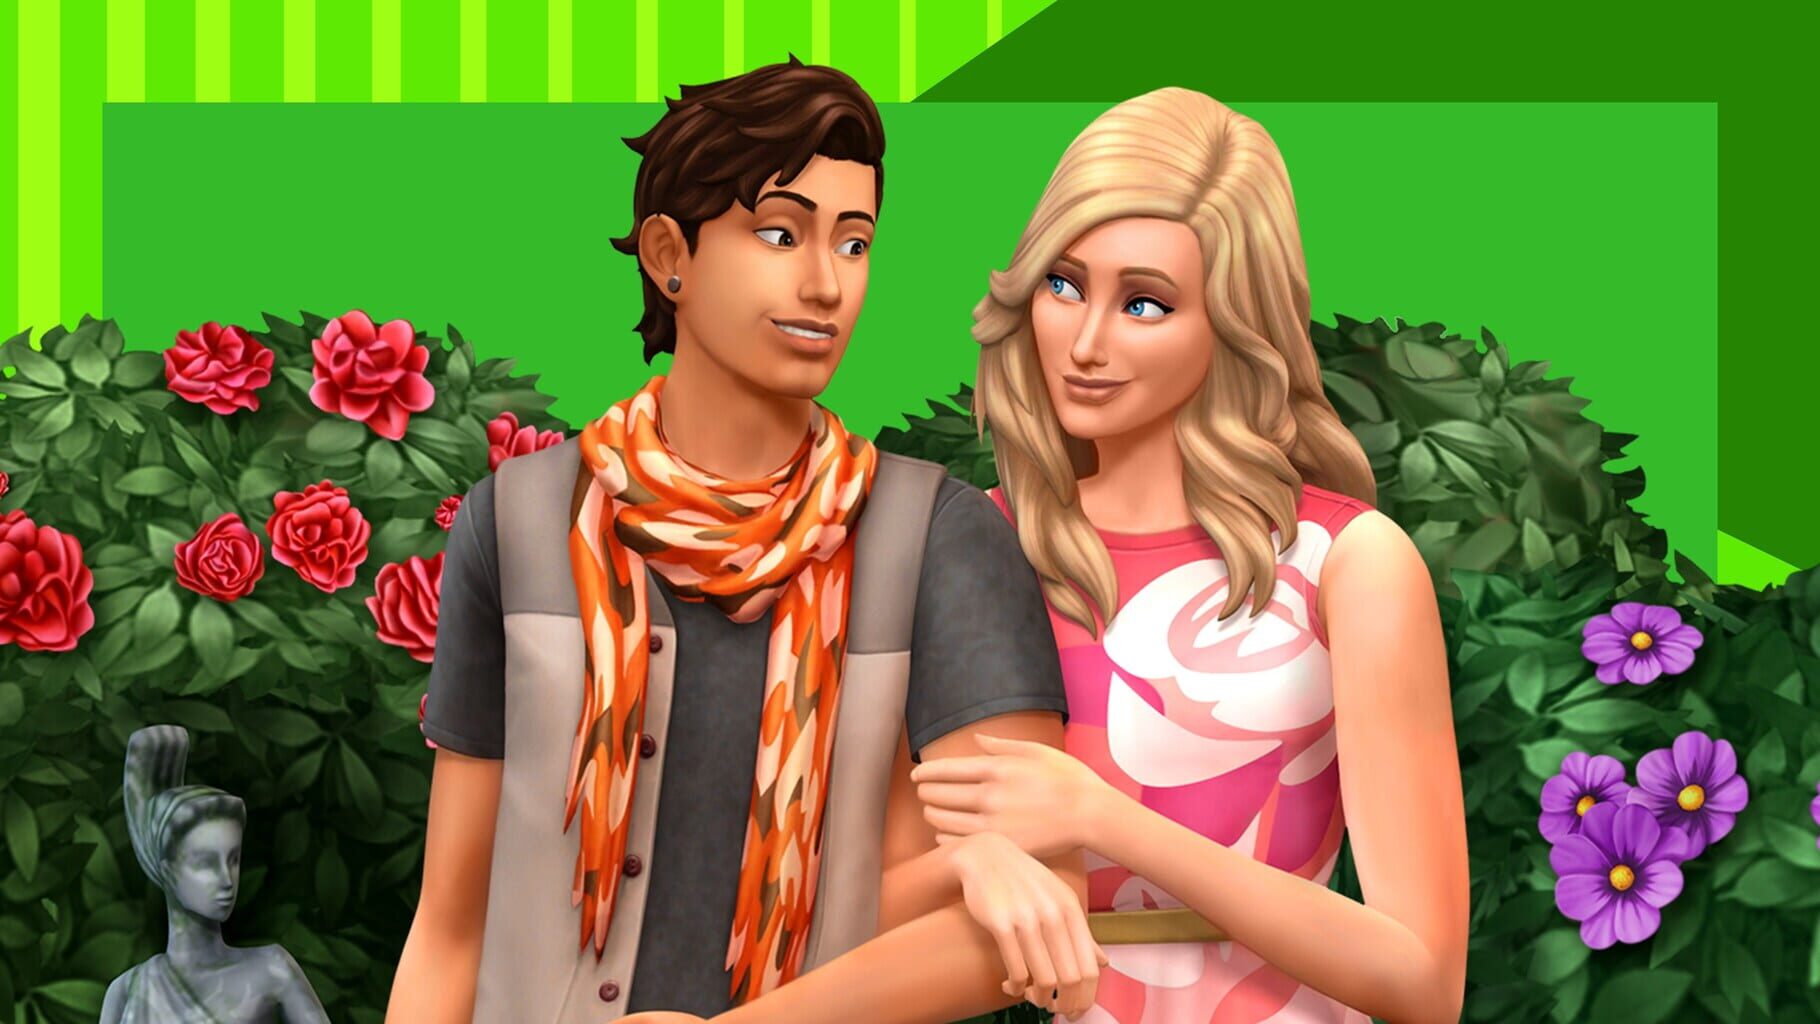 Arte - The Sims 4: Romantic Garden Stuff